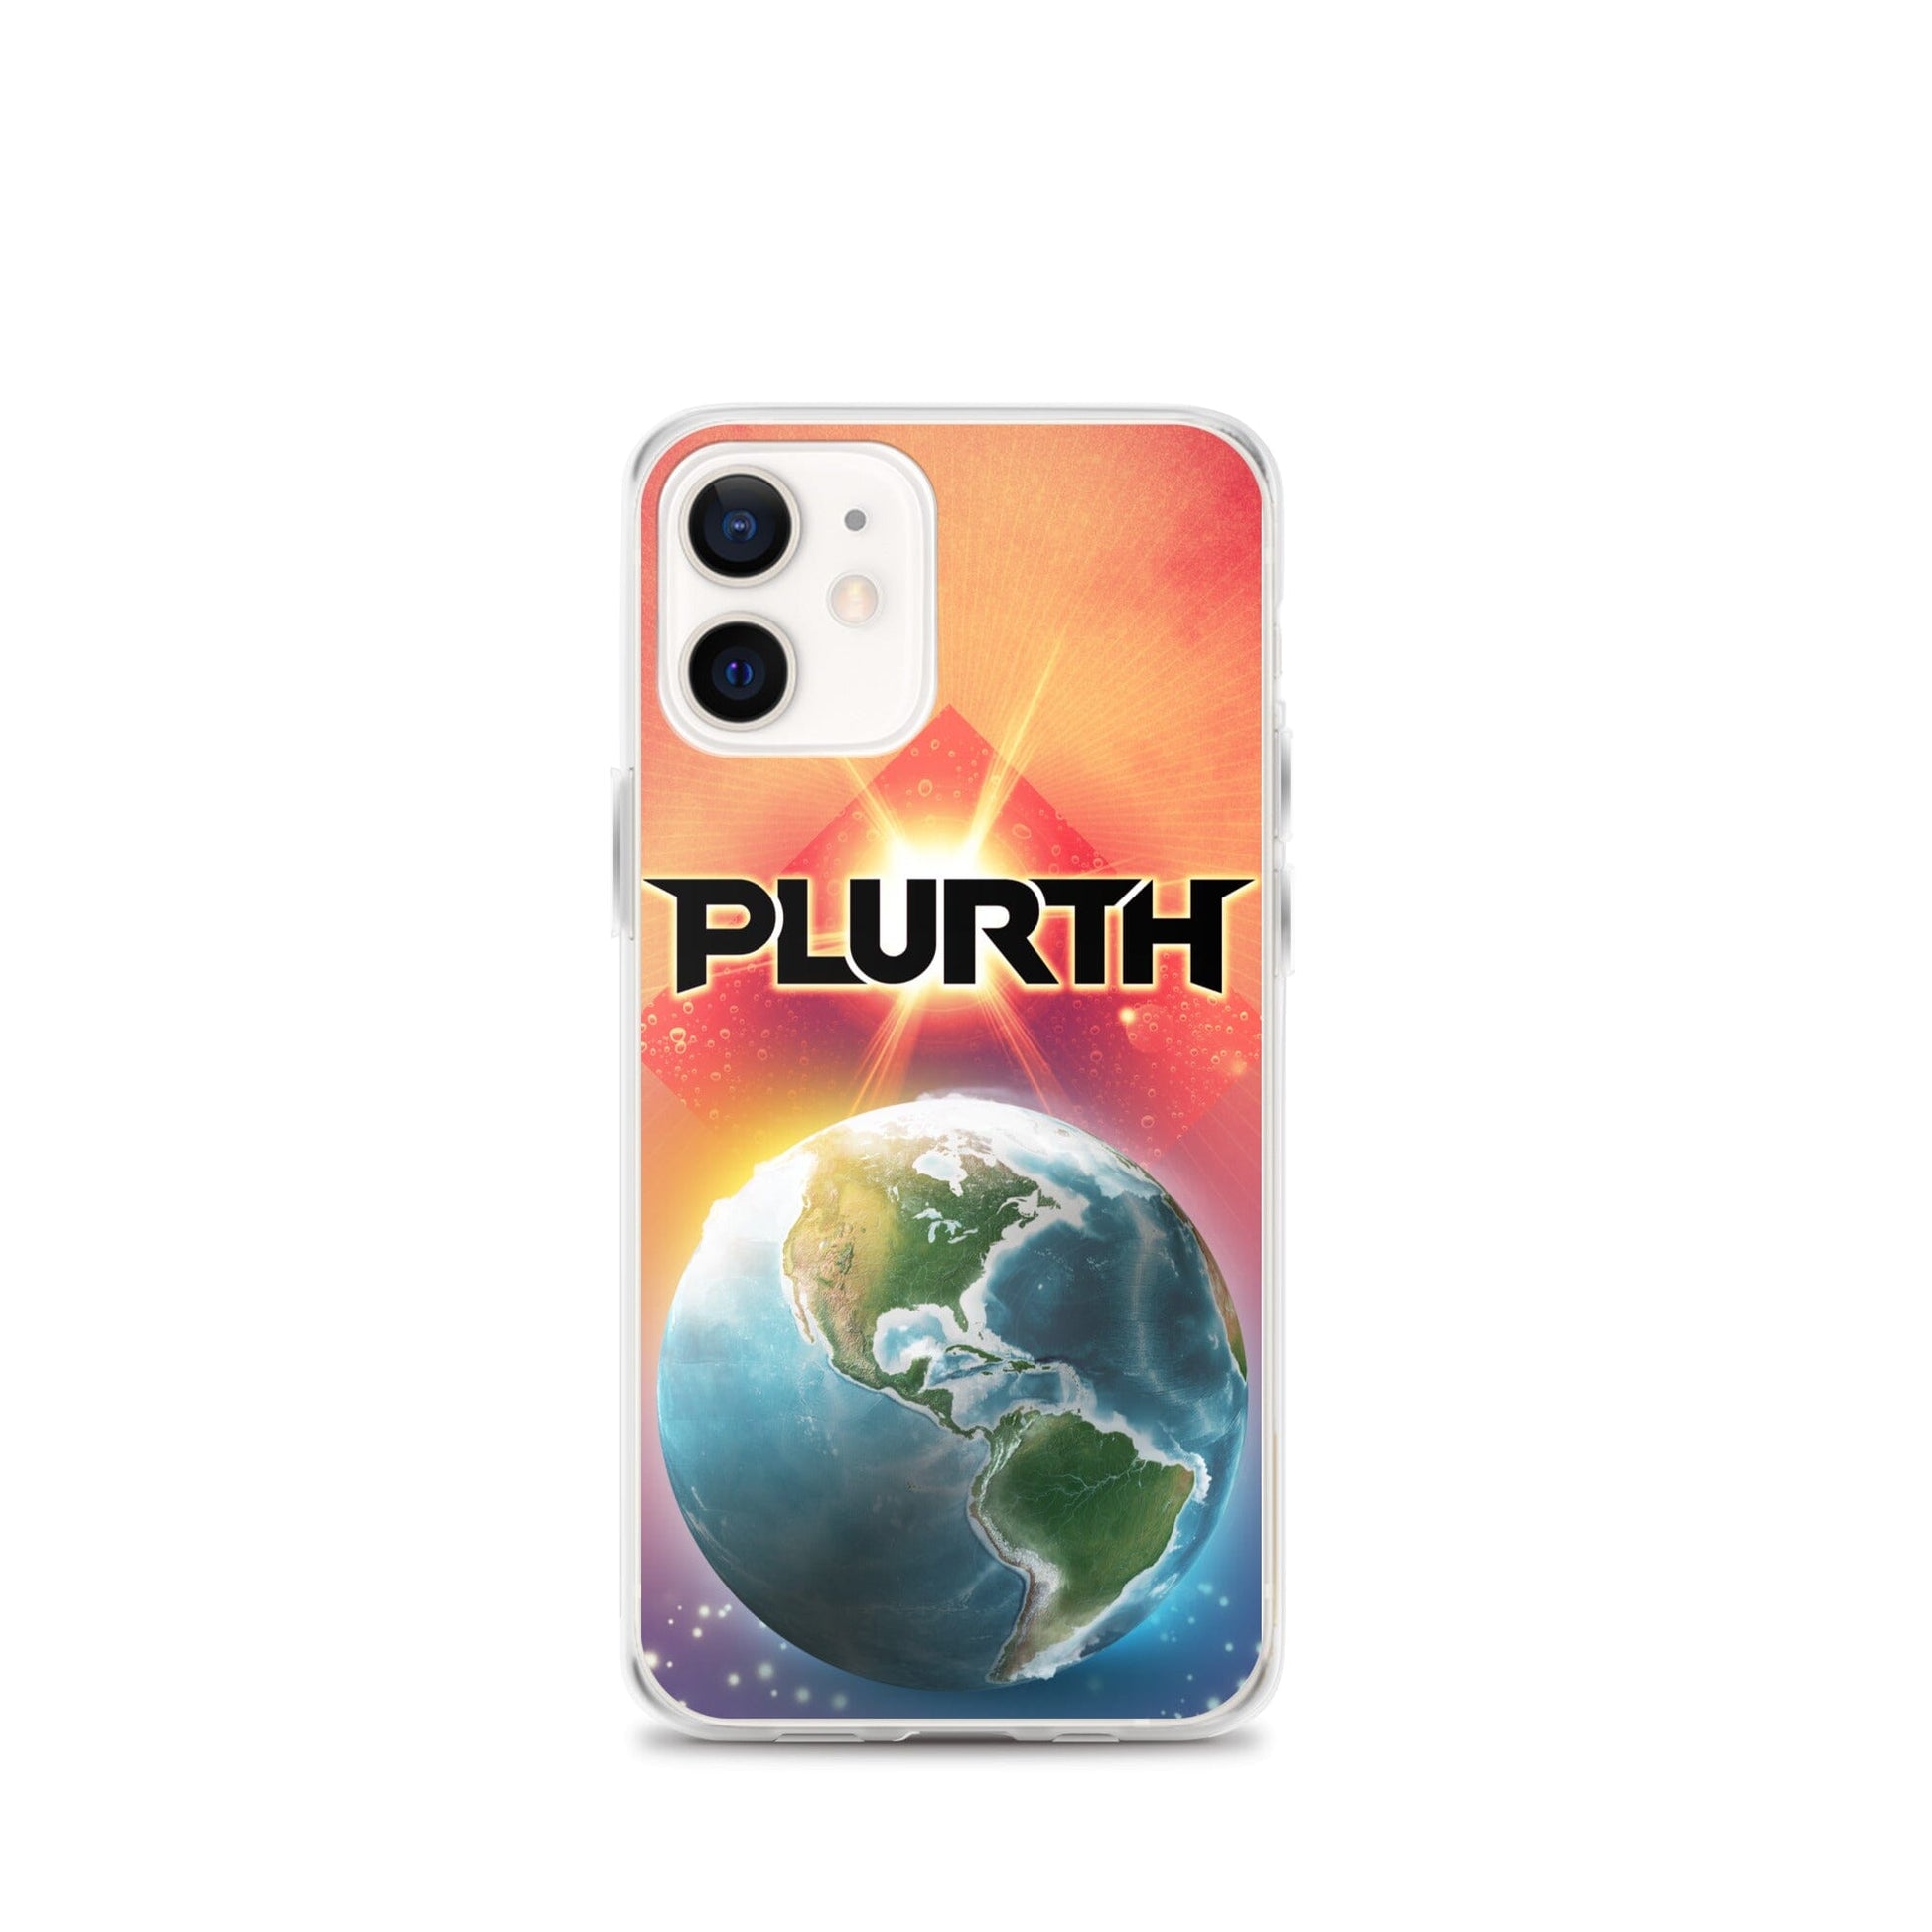 PLURTH iPhone Case PLURTHLINGS iPhone 12 mini 